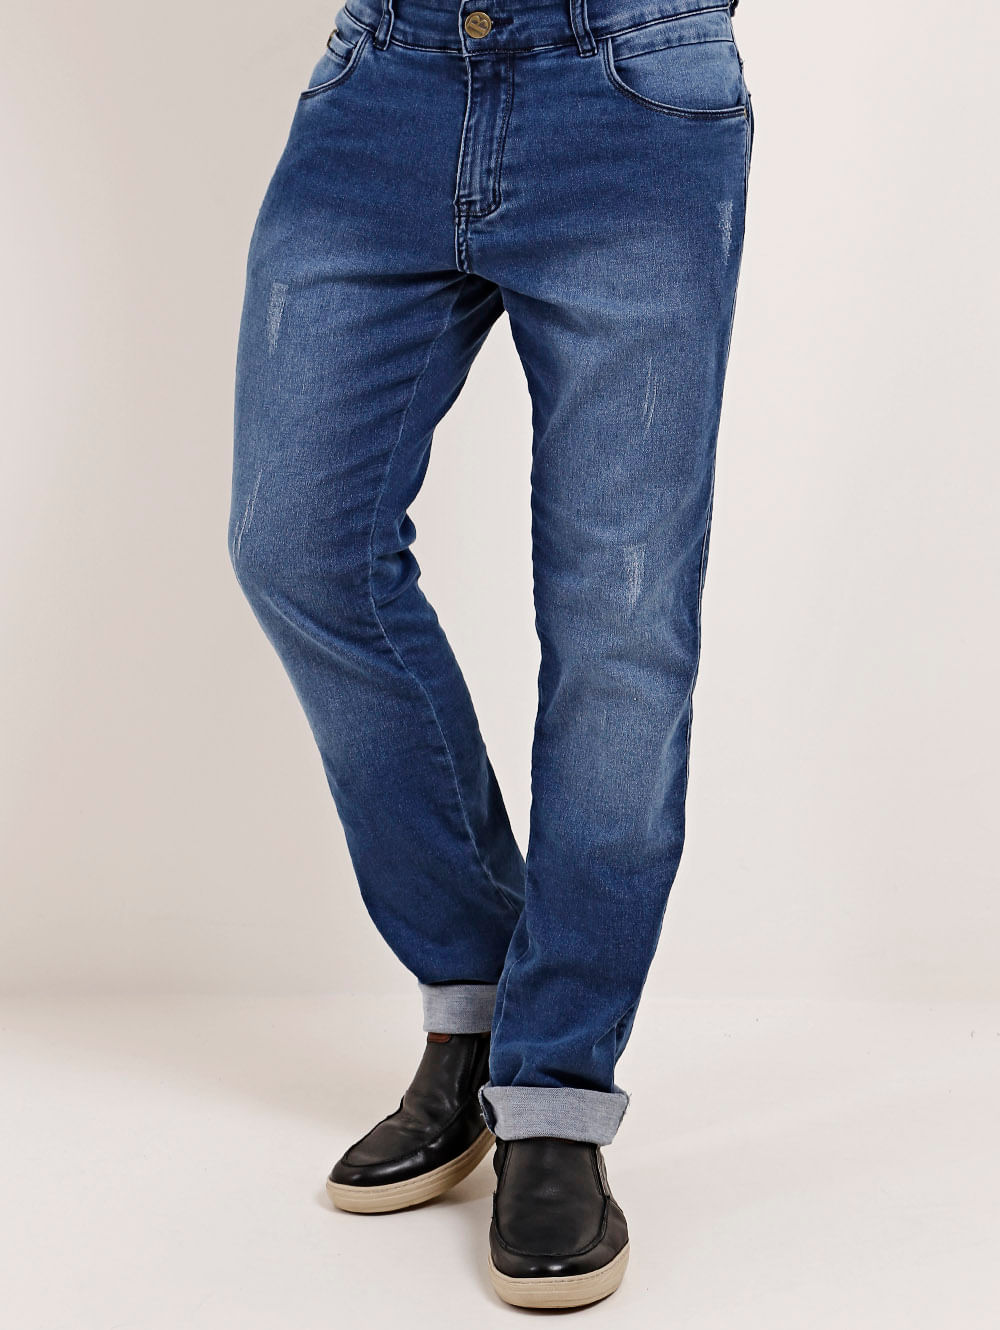 calça jeans masculina tamanho 14